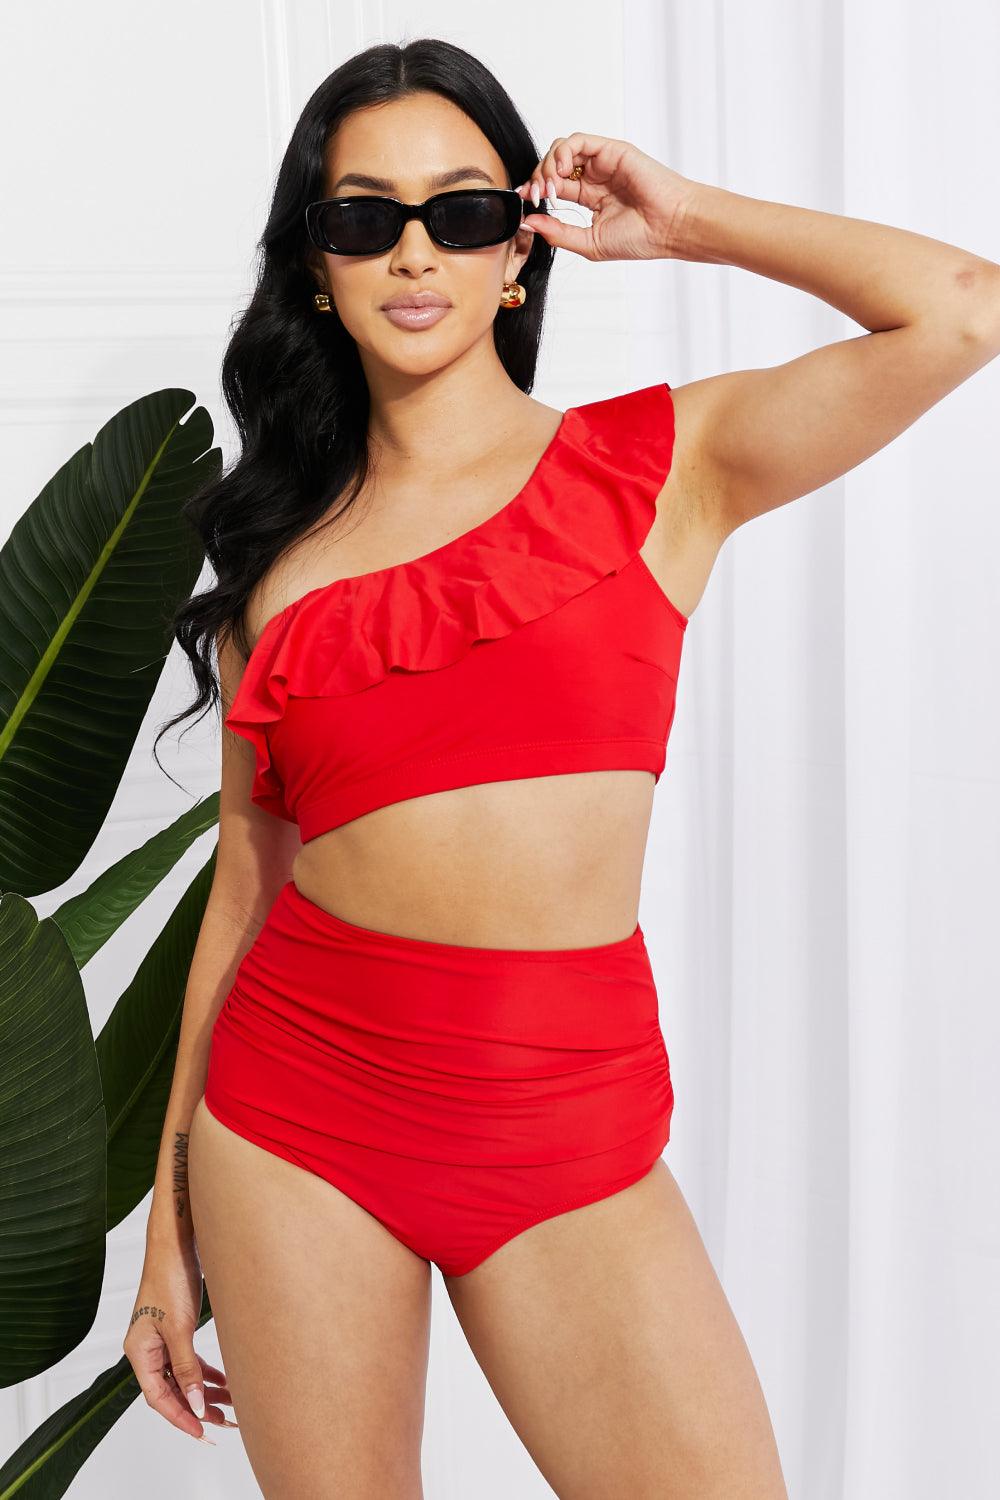 Marina West Swim Seaside Romance Ruffle One-Shoulder Bikini in Red - Glamorous Boutique USA L.L.C.